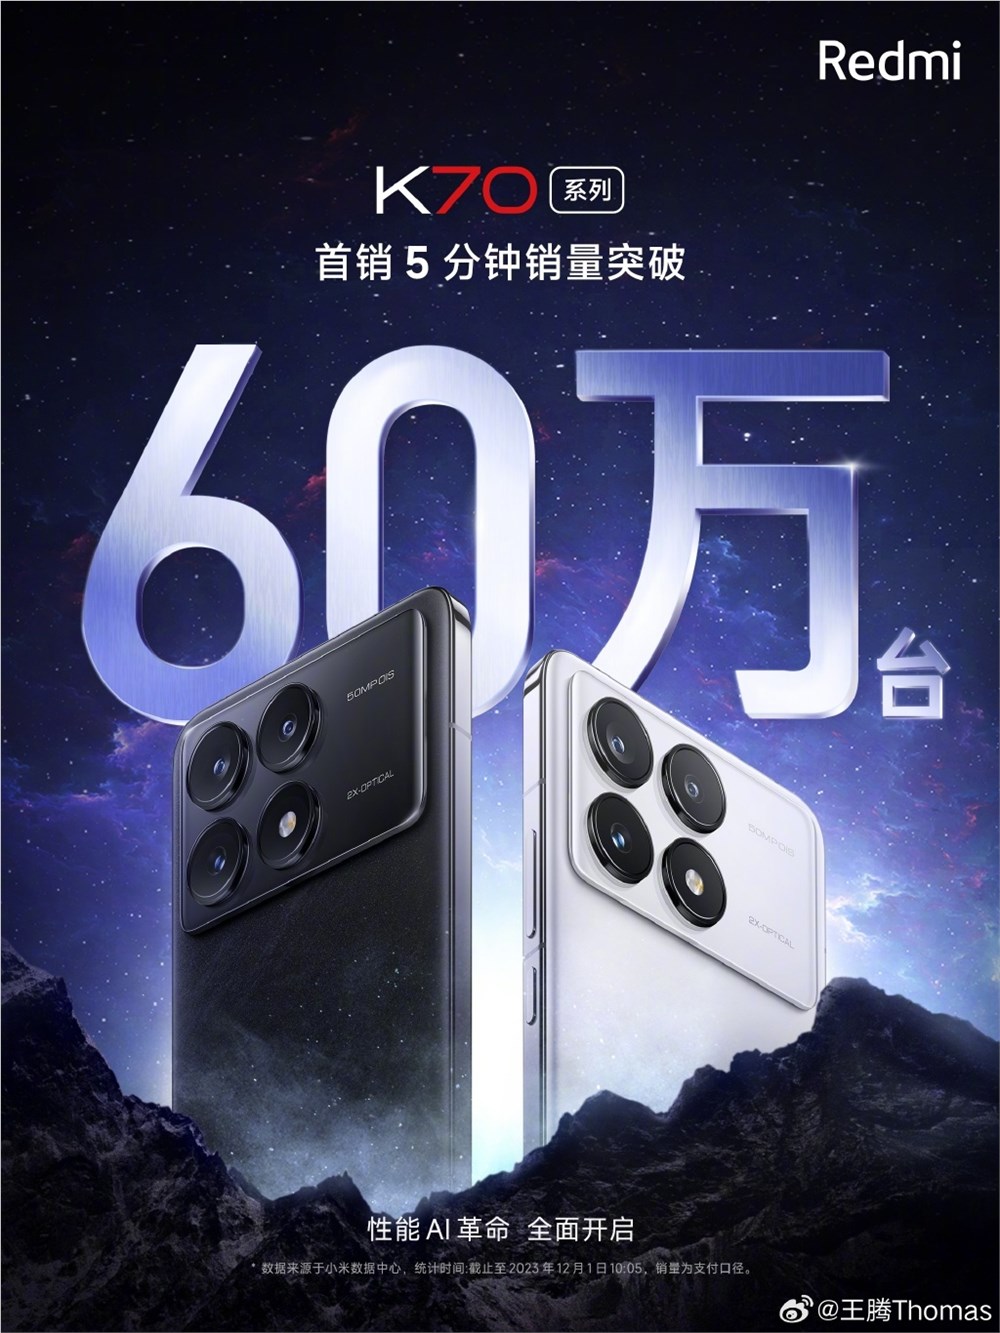 Redmi K70 Pro、K70标准版今日开售 首销5分钟销量破60万台